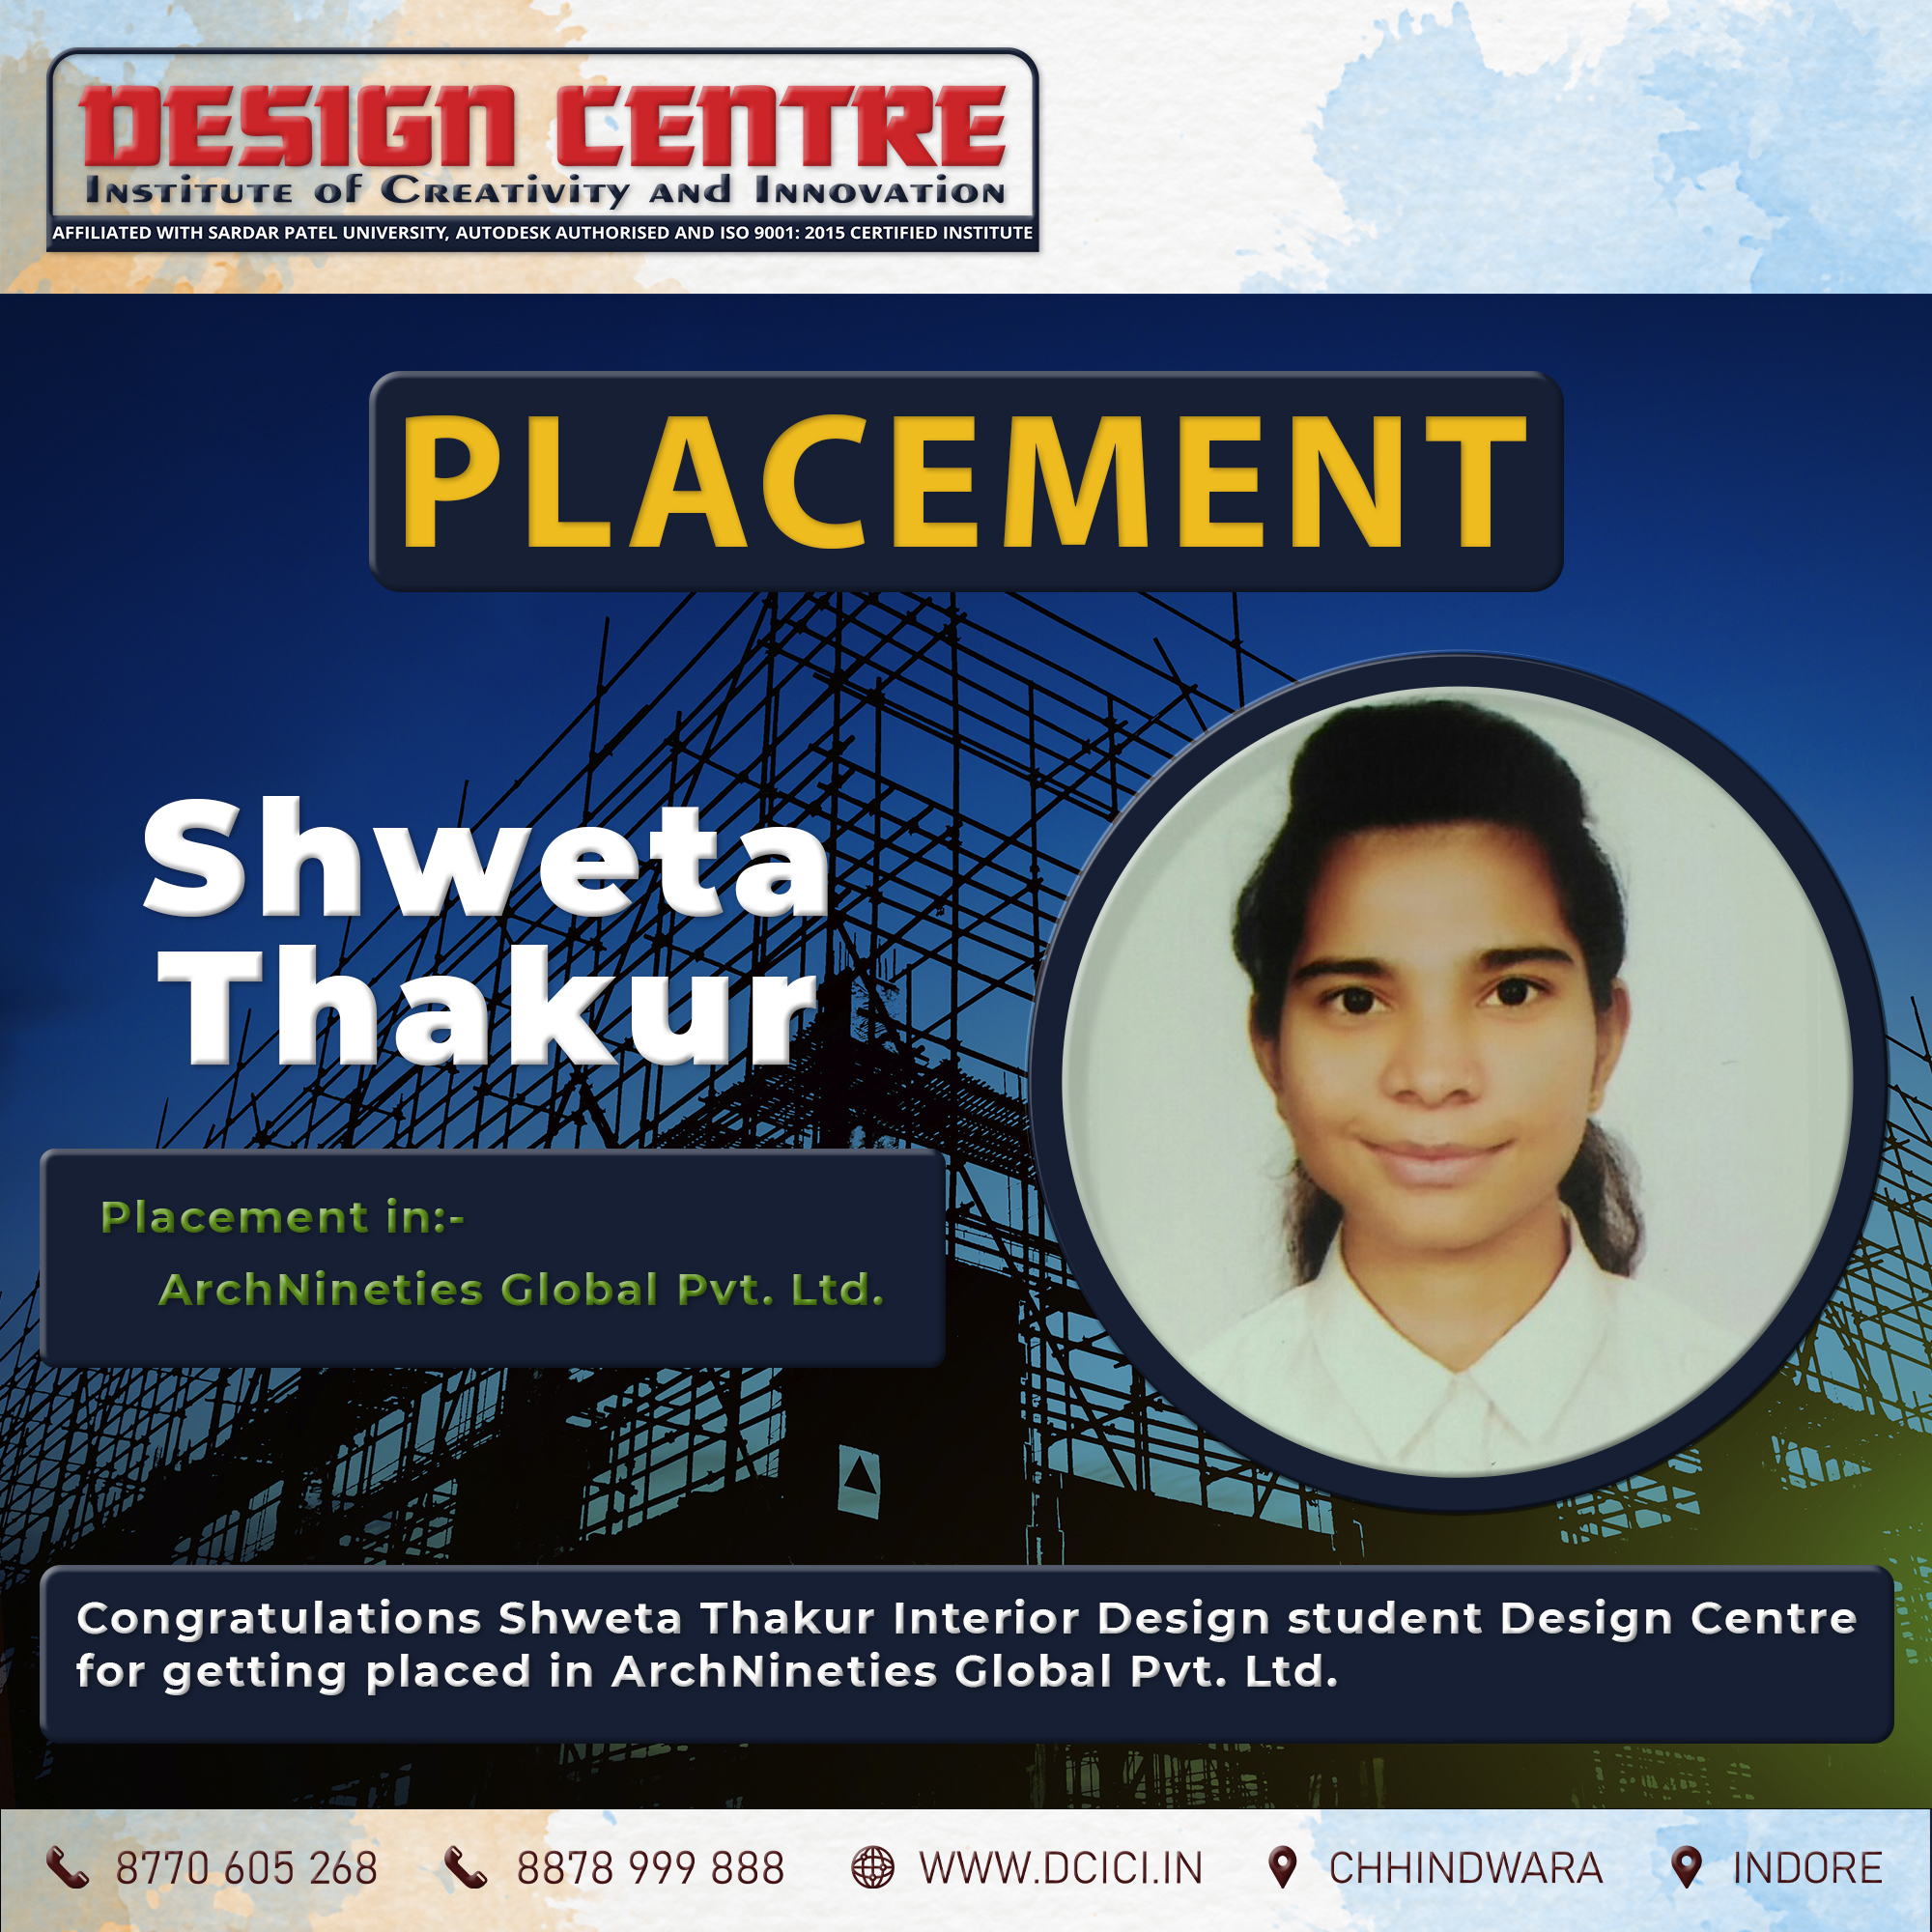 Shweta Thakur design centre interior design student got placement in archnineties global pvt, ltd.